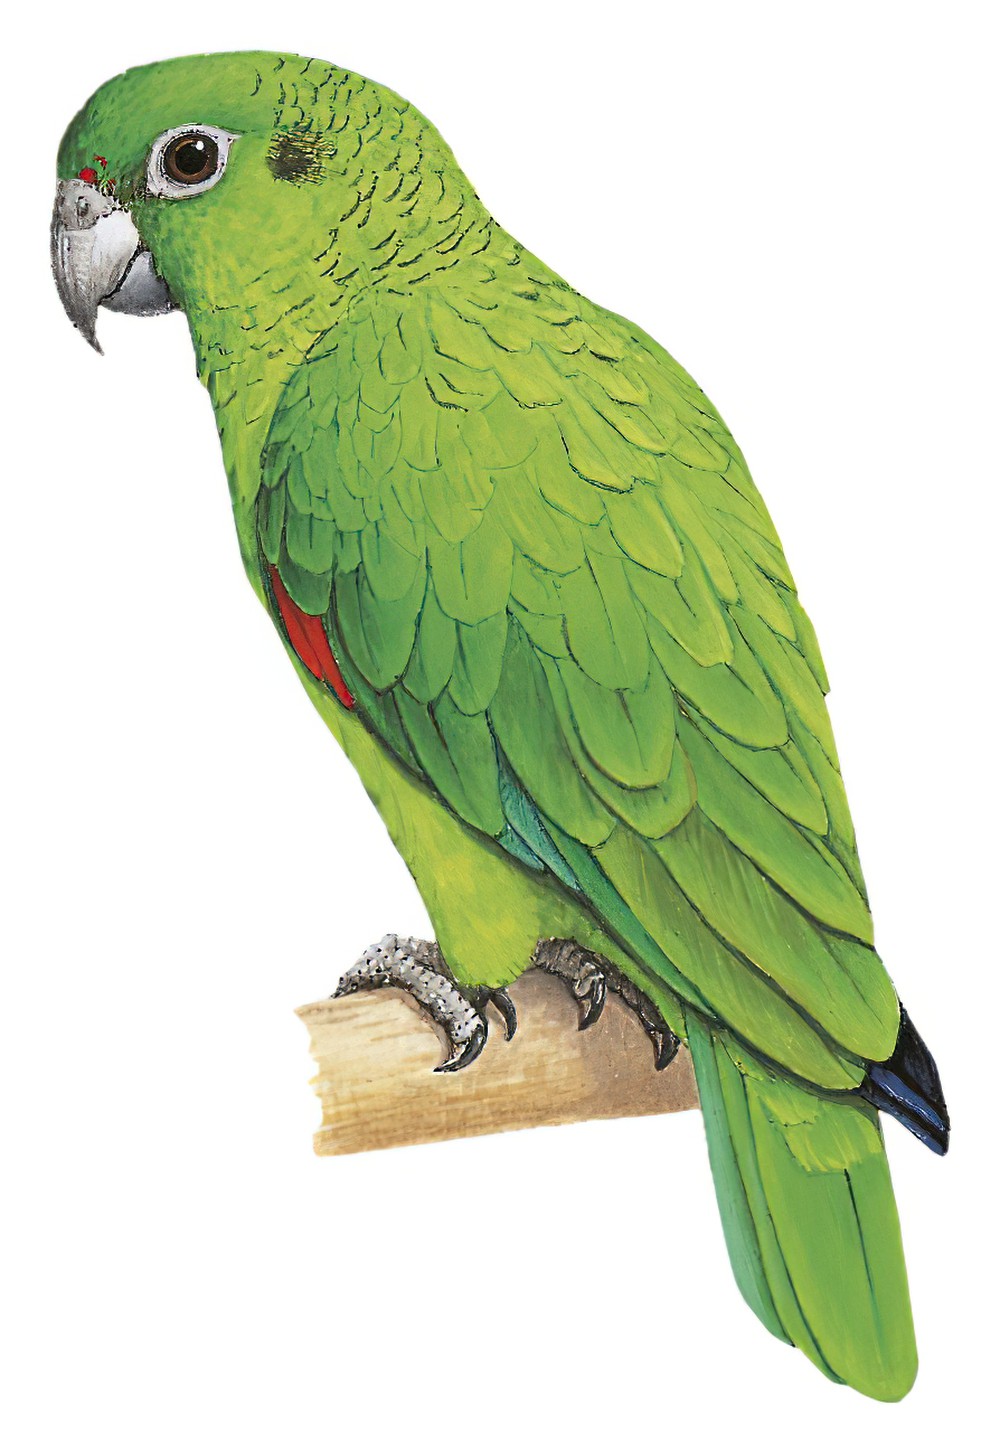 Black-billed Parrot / Amazona agilis